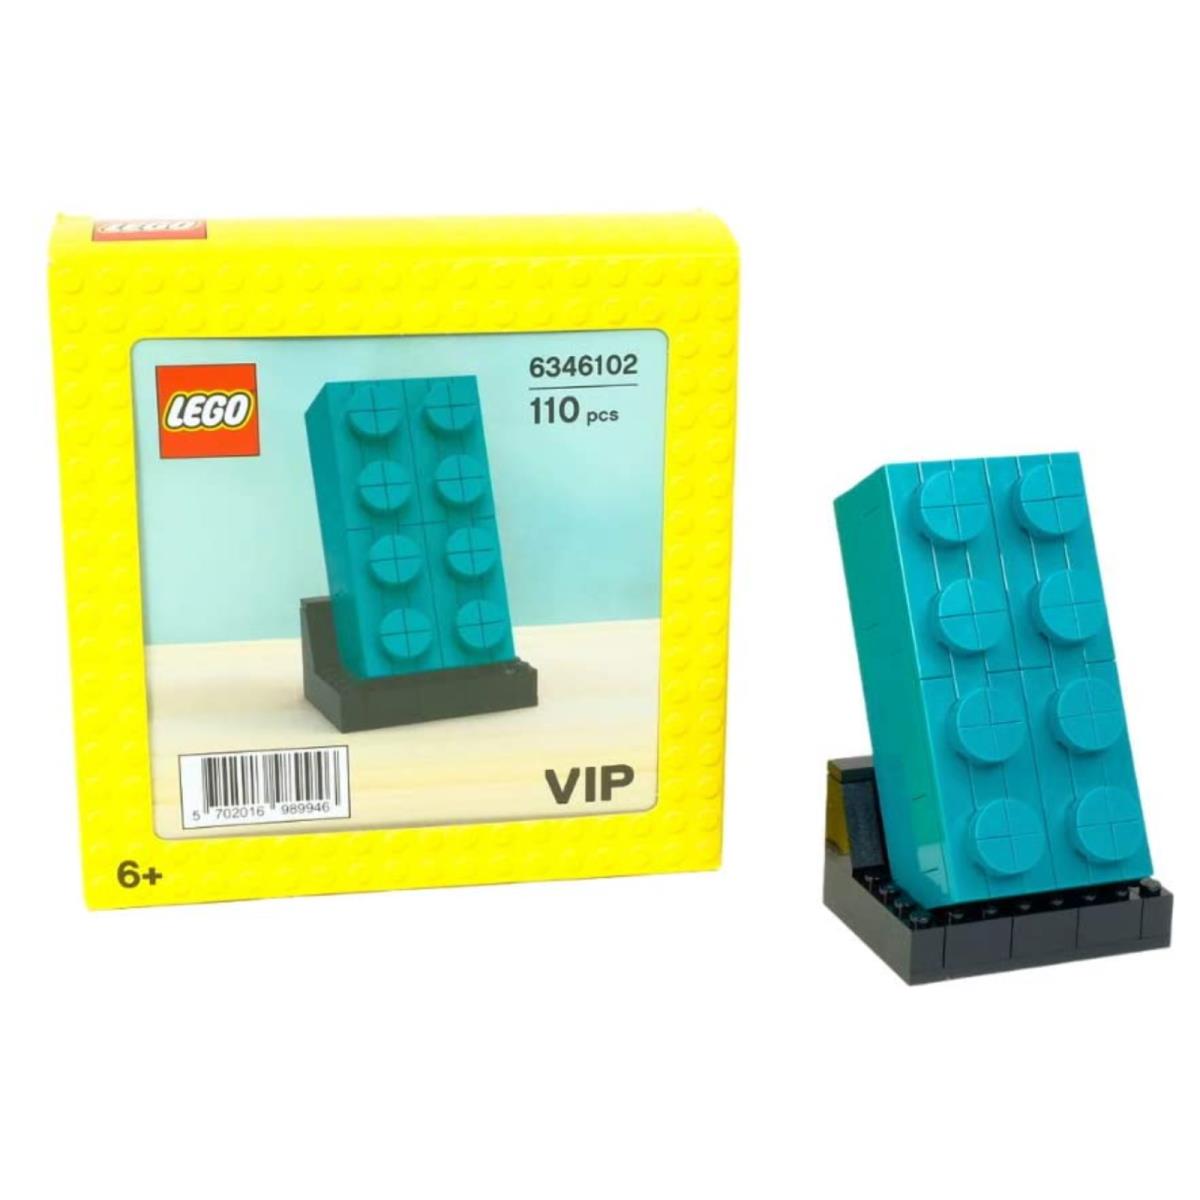 Lego Vip 6346101 2 x 4 Teal Brick Building Toy Set 110 Pcs - Teal